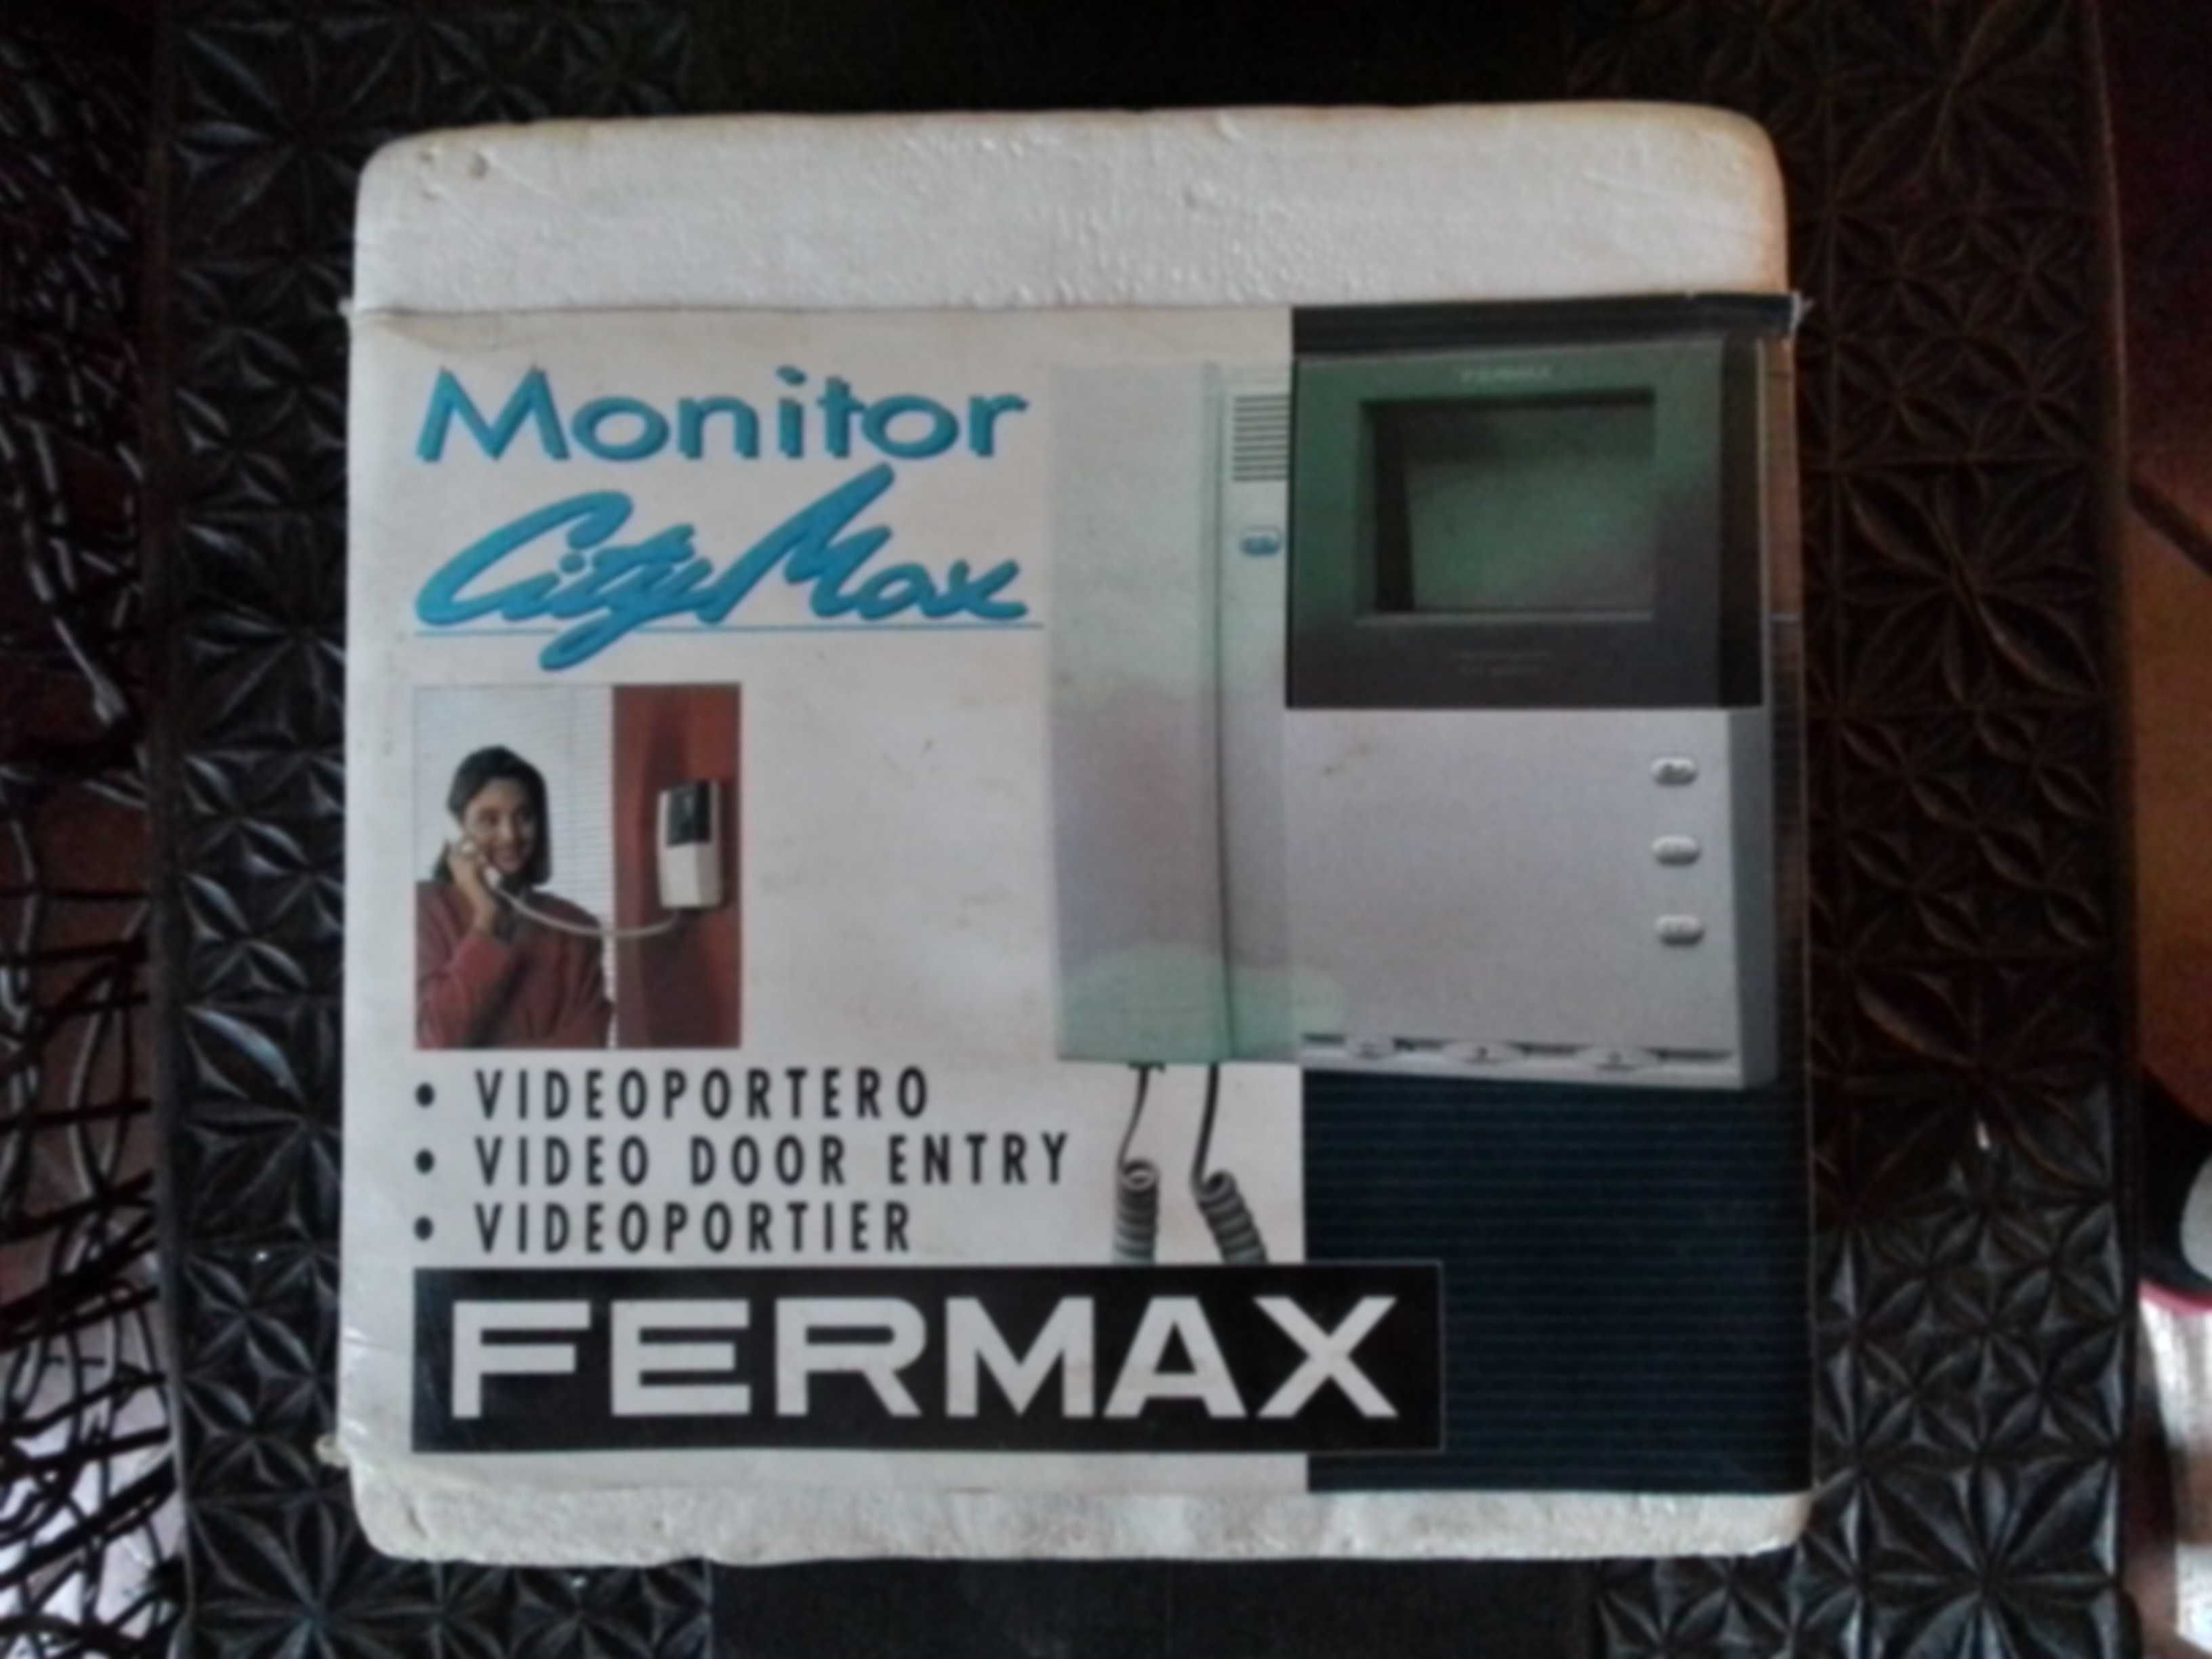 Fermax monitor cityMax